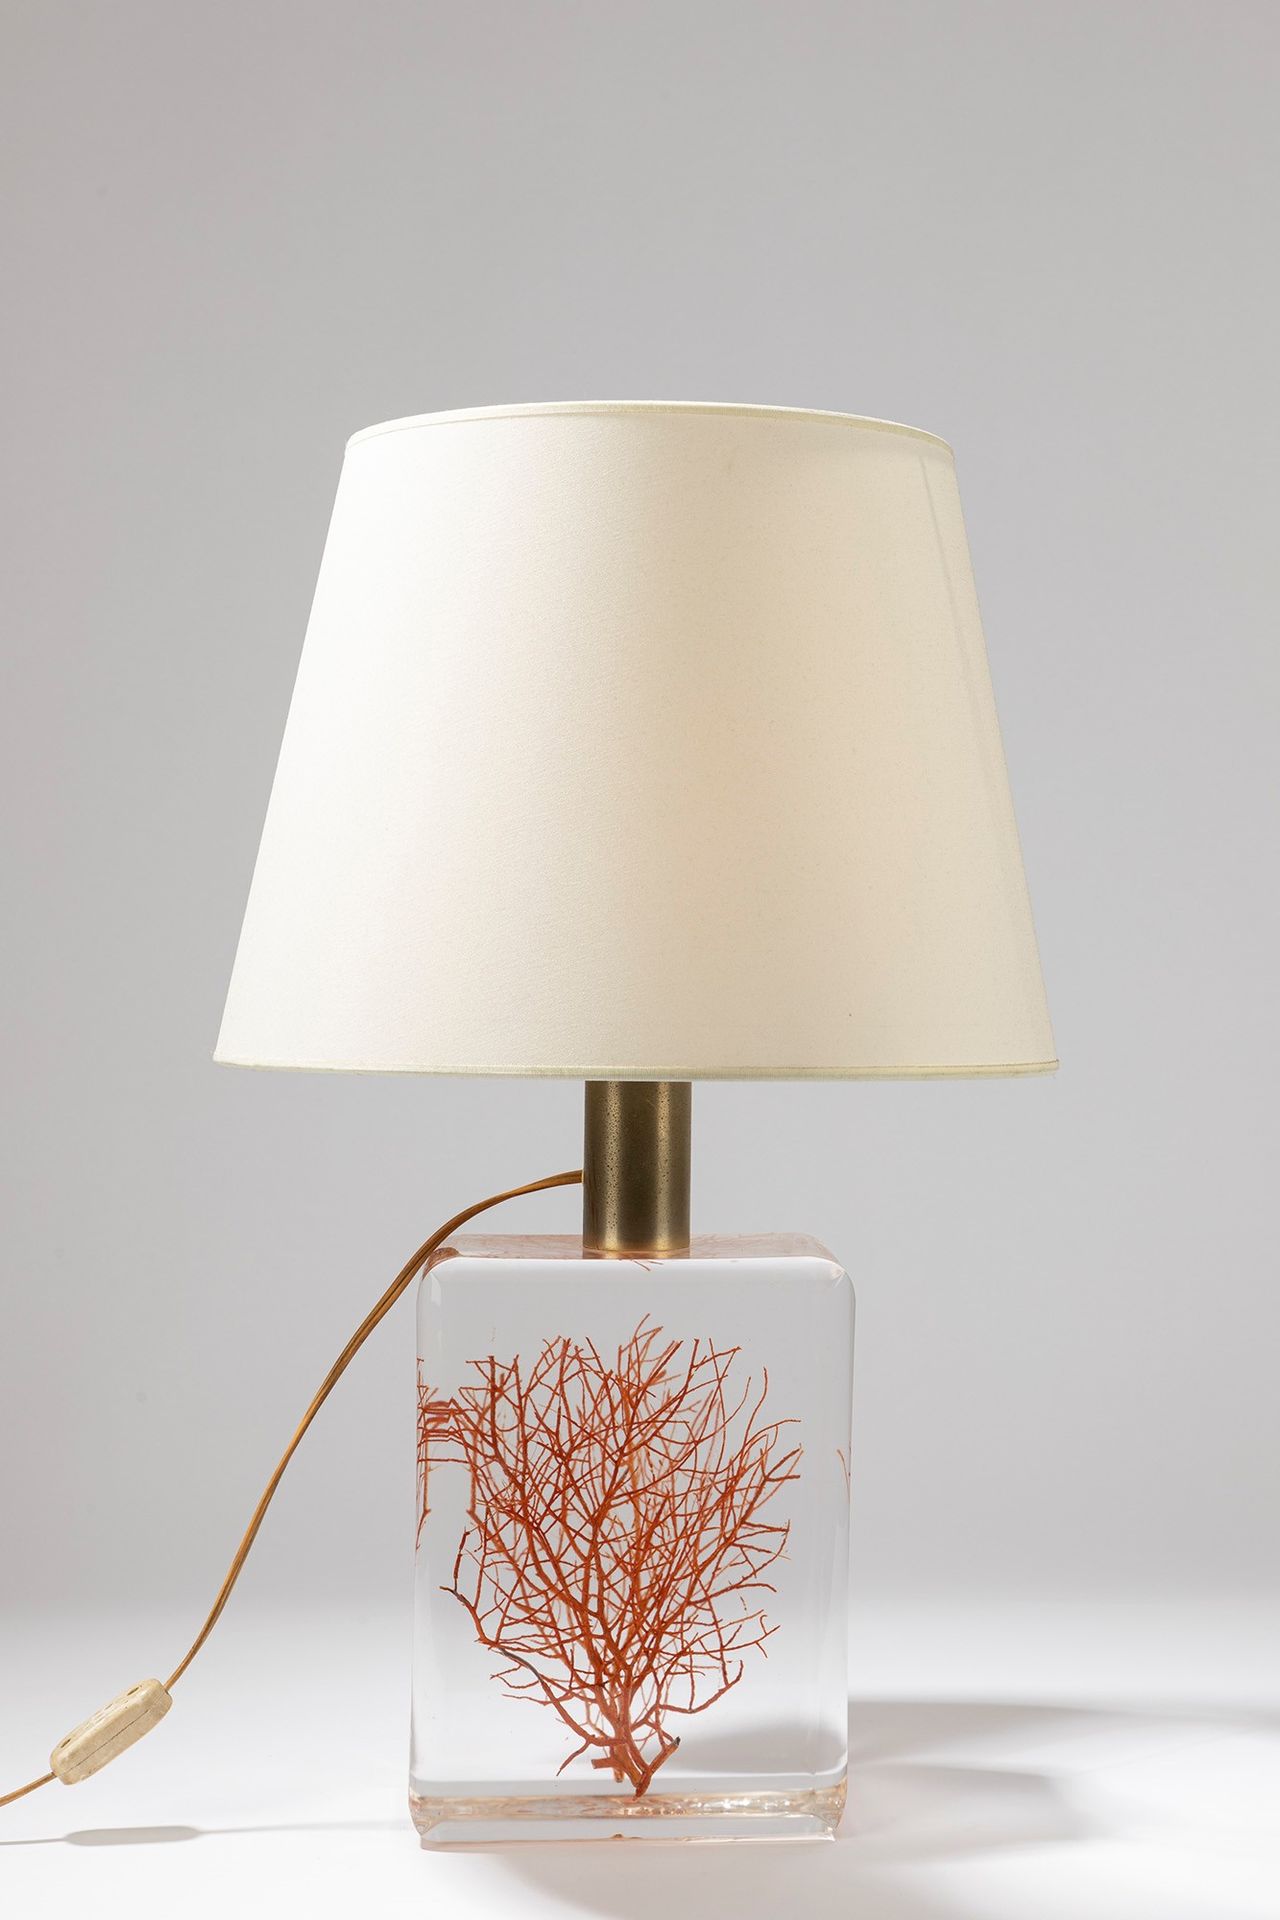 ITALIAN MANUFACTURE Lampe de table, période 70's

H cm 54
en méthacrylate avec u&hellip;